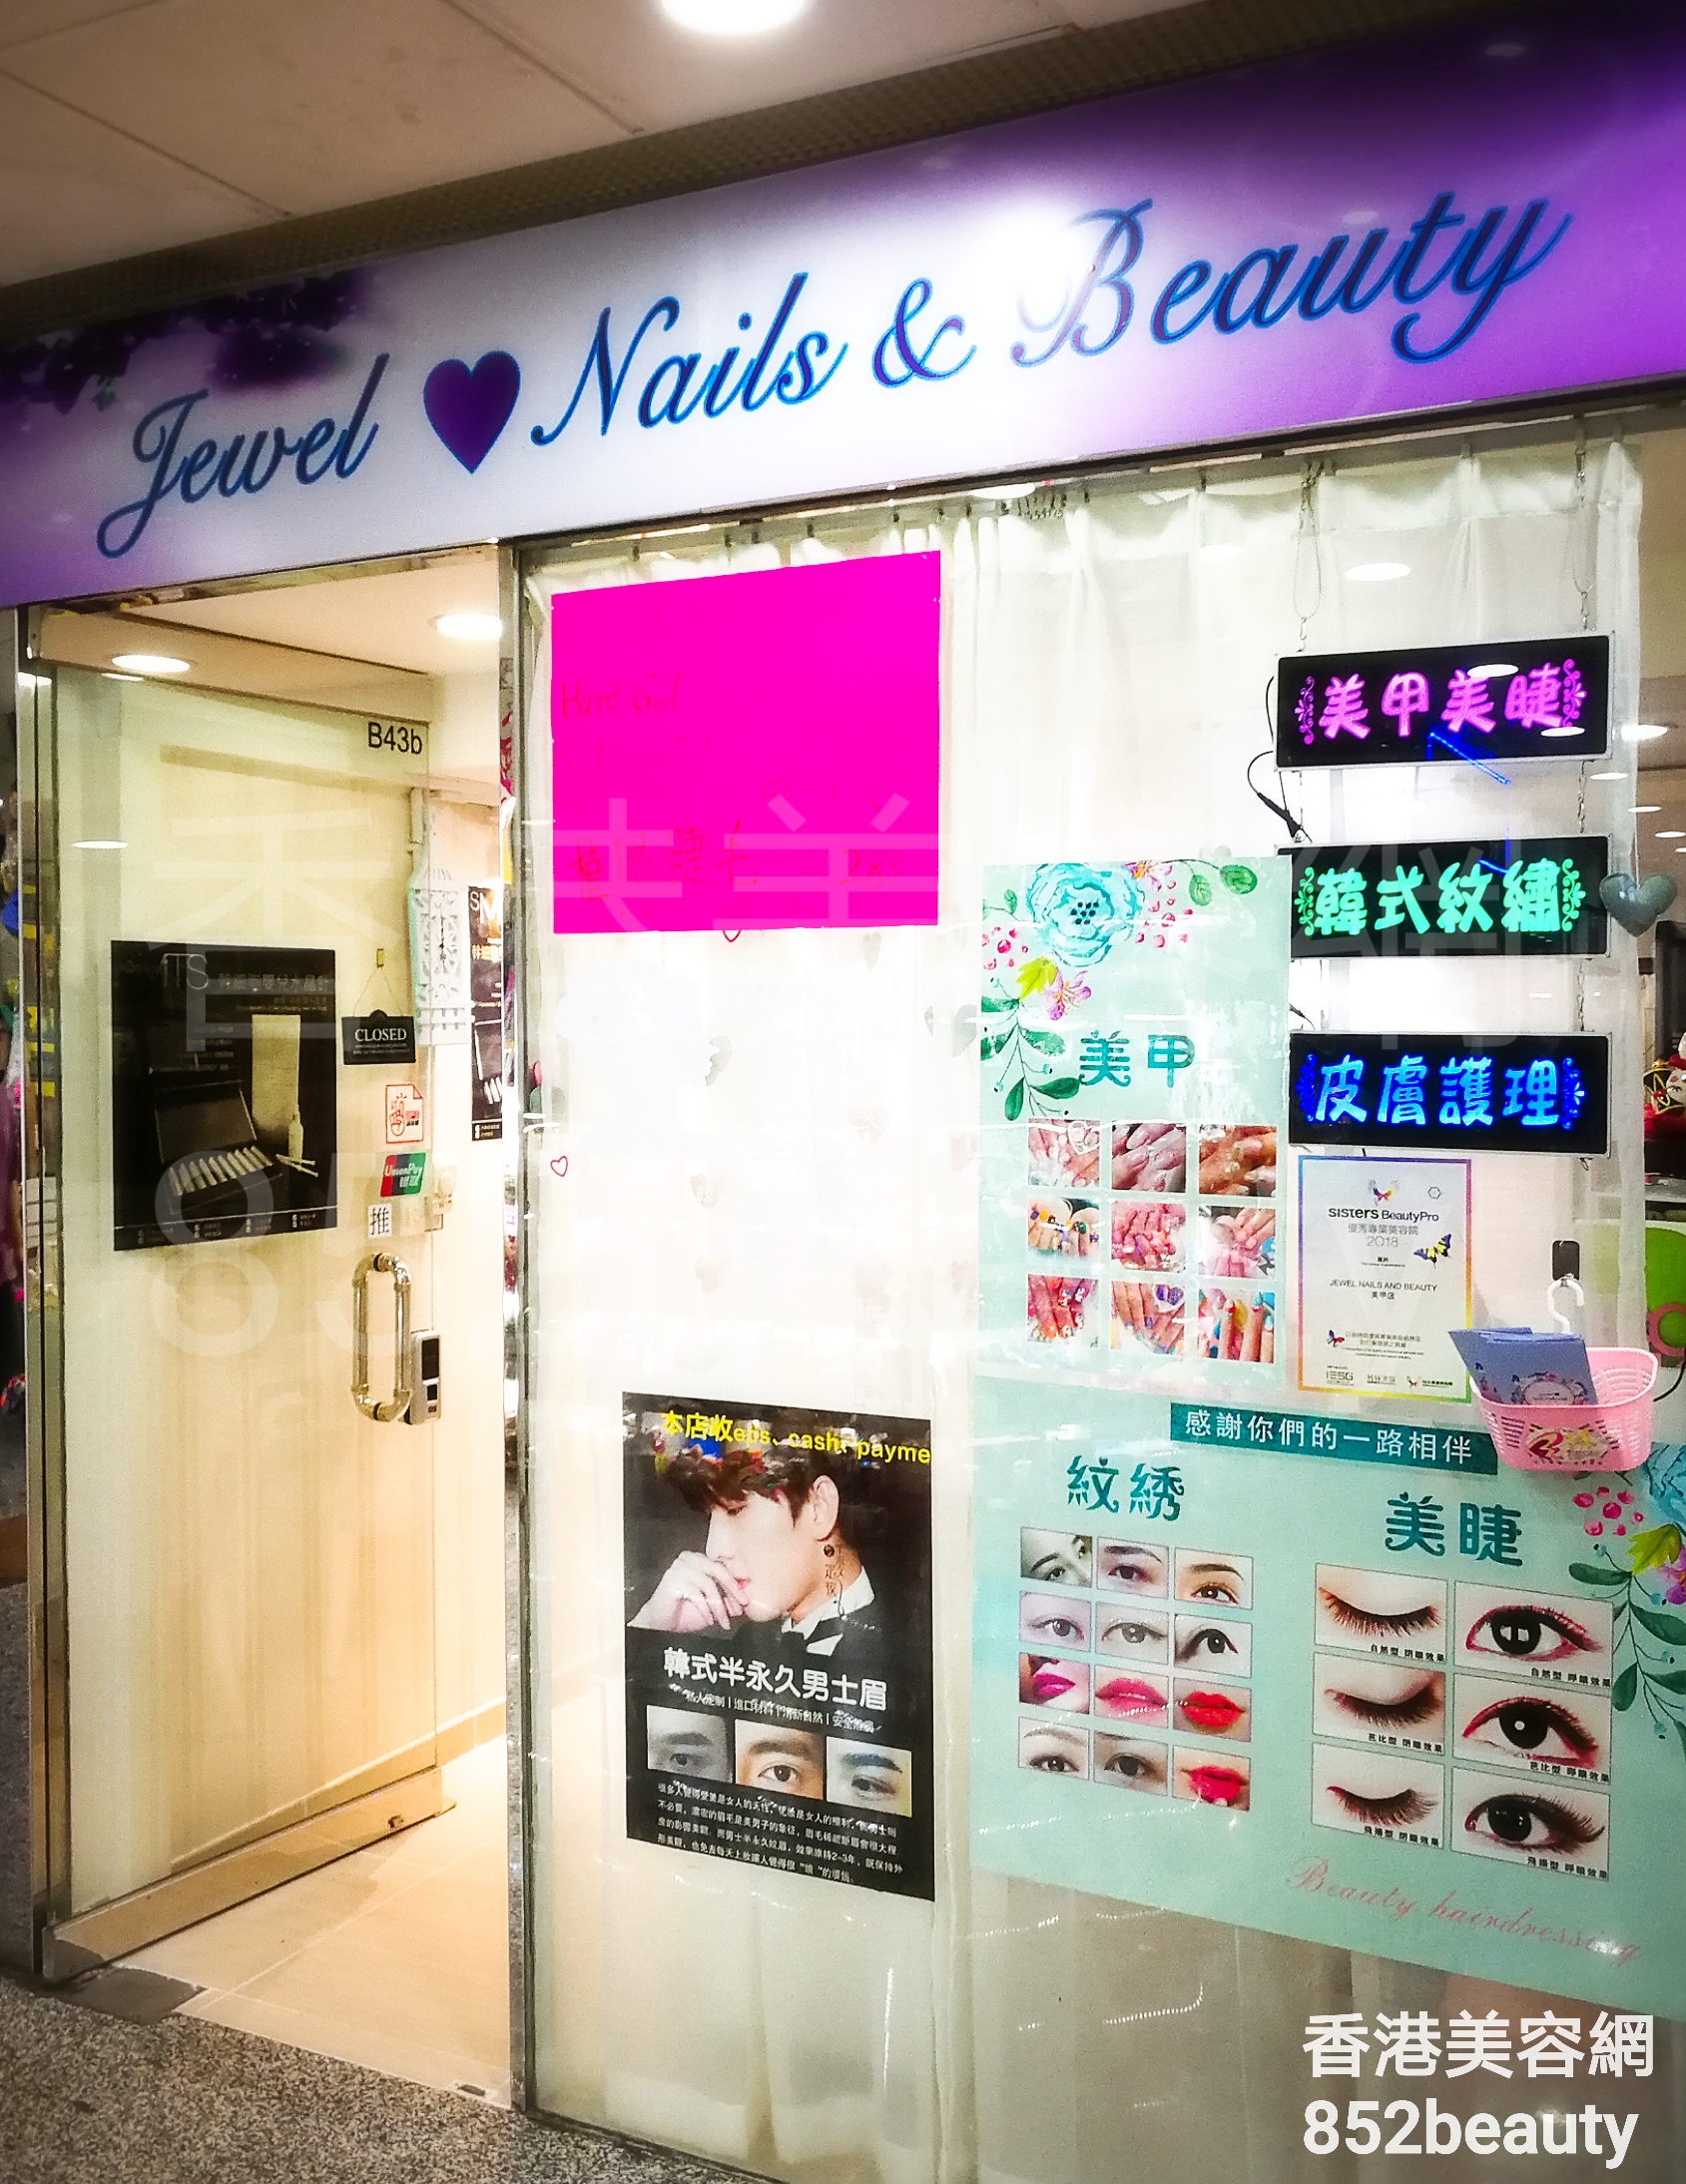 香港美容網 Hong Kong Beauty Salon 美容院 / 美容師: Jewel Nails & Beauty